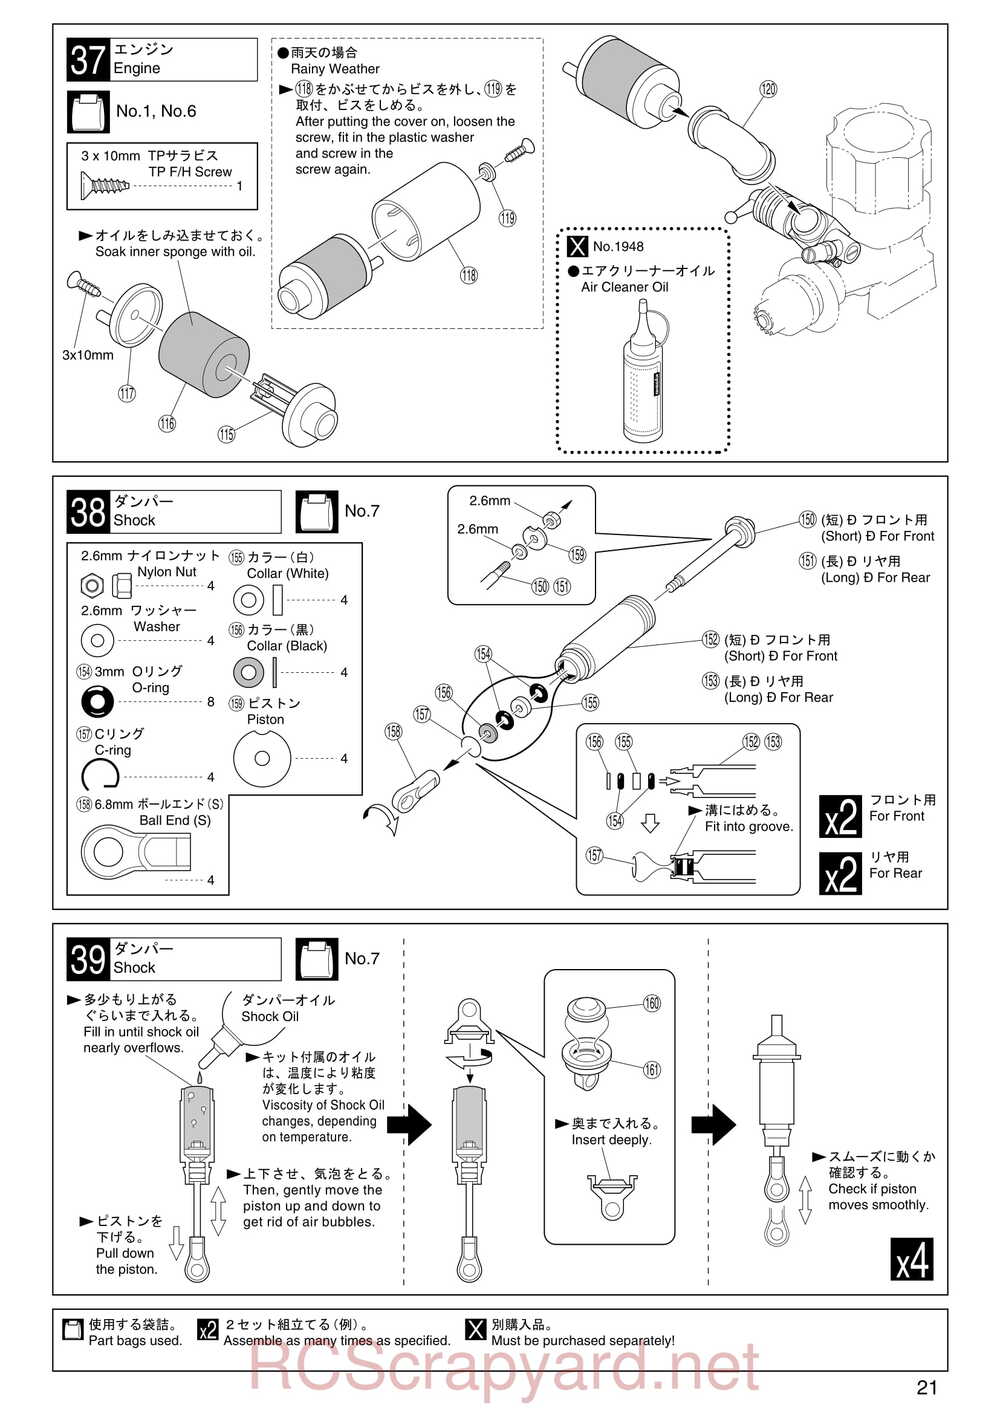 Kyosho - 31192 - Inferno-MP-7-5 Sports - Manual - Page 21